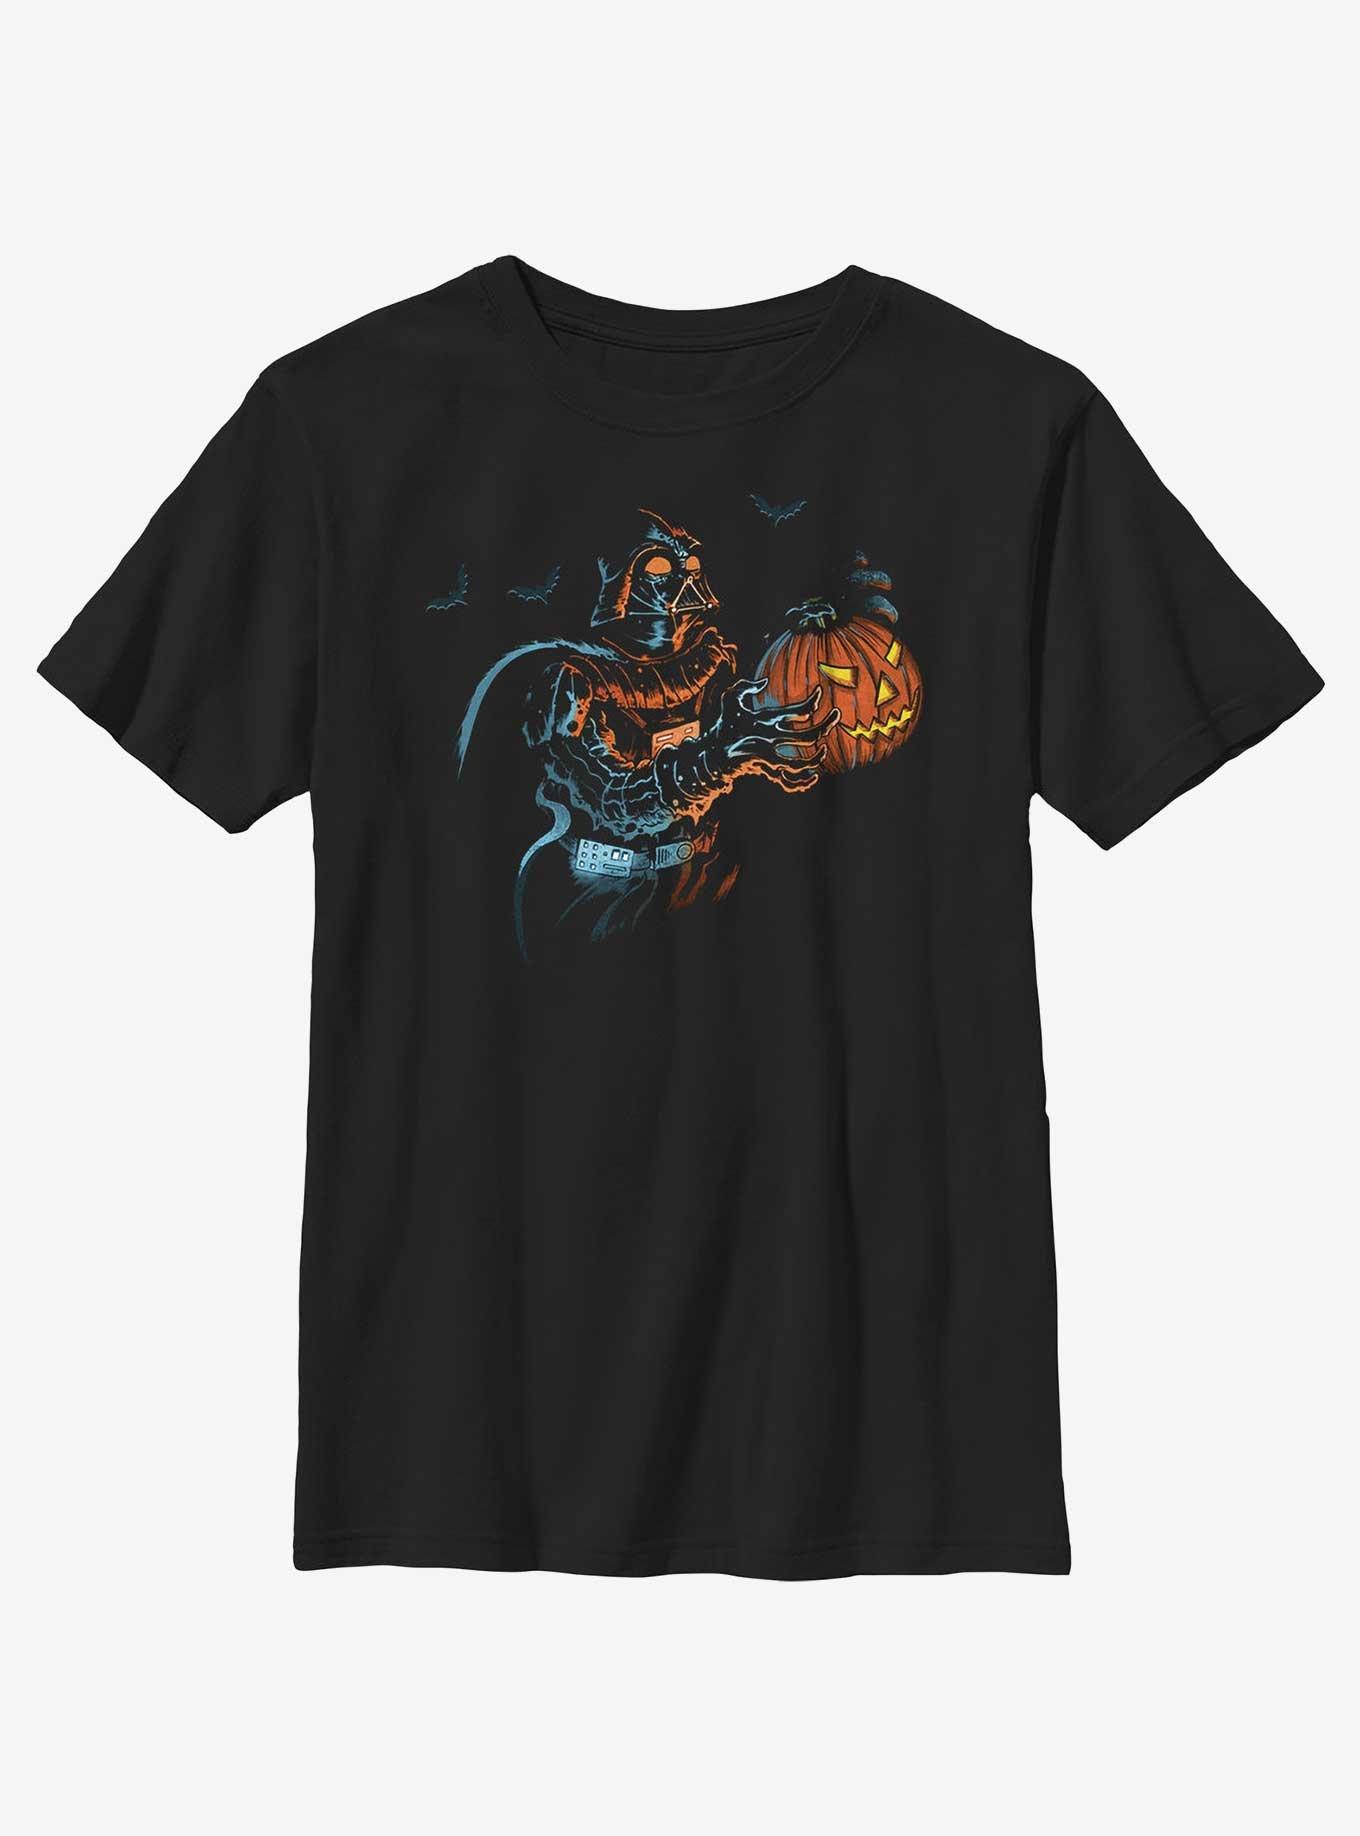 Star Wars Spooky Darth Vader Youth T-Shirt, BLACK, hi-res